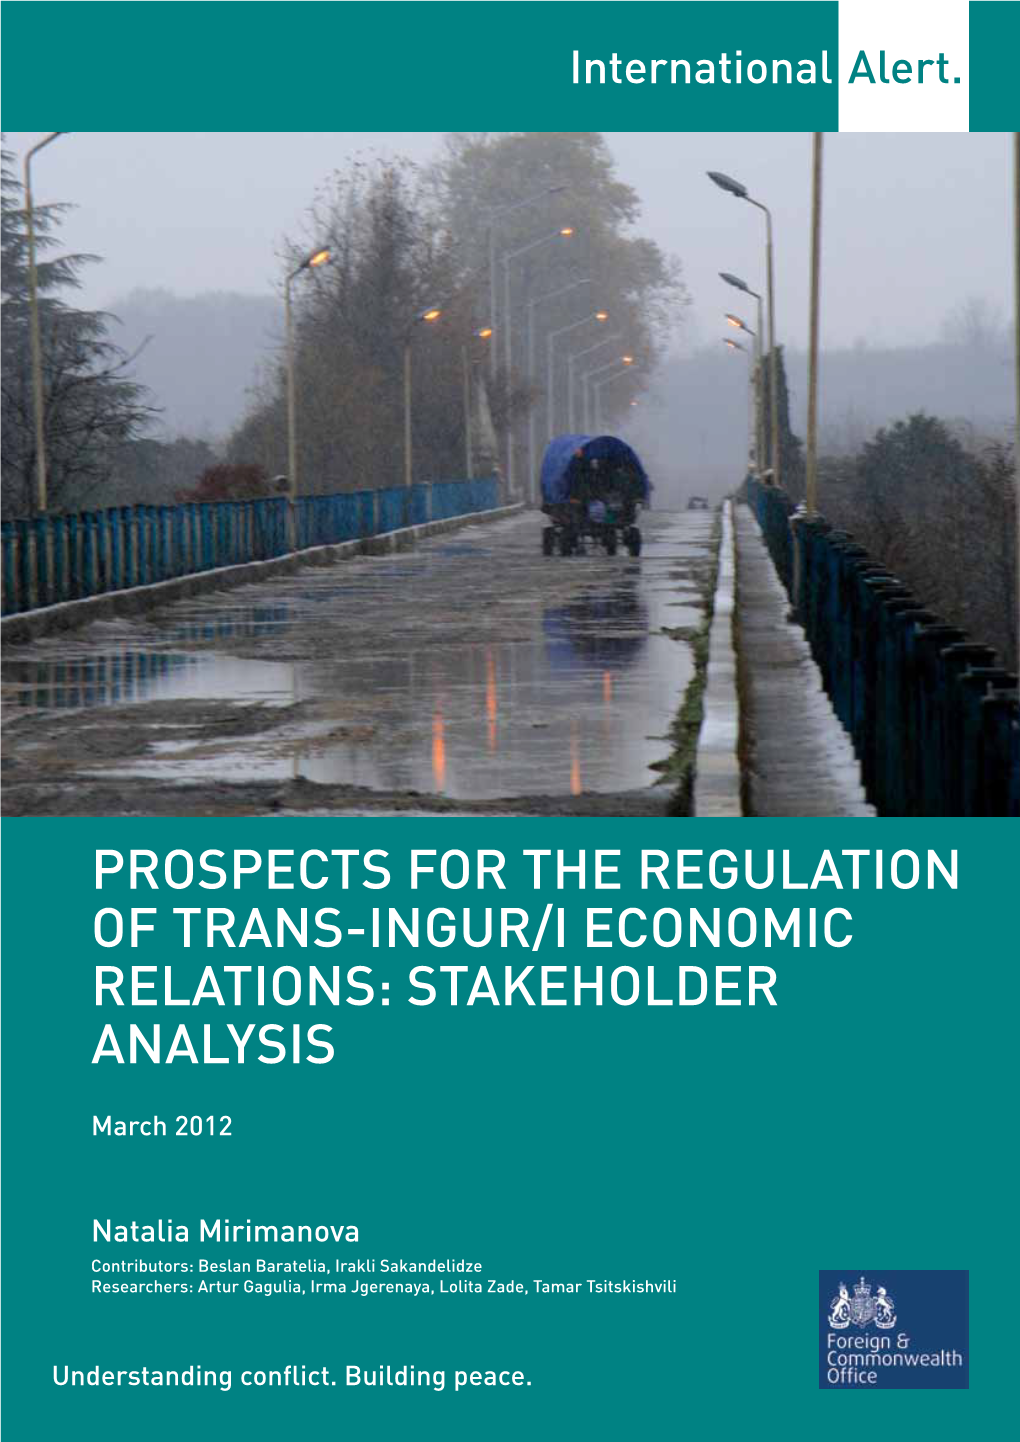 Prospects for the Regulation of Trans-Ingur/I Economic Relations: Stakeholder Analysis